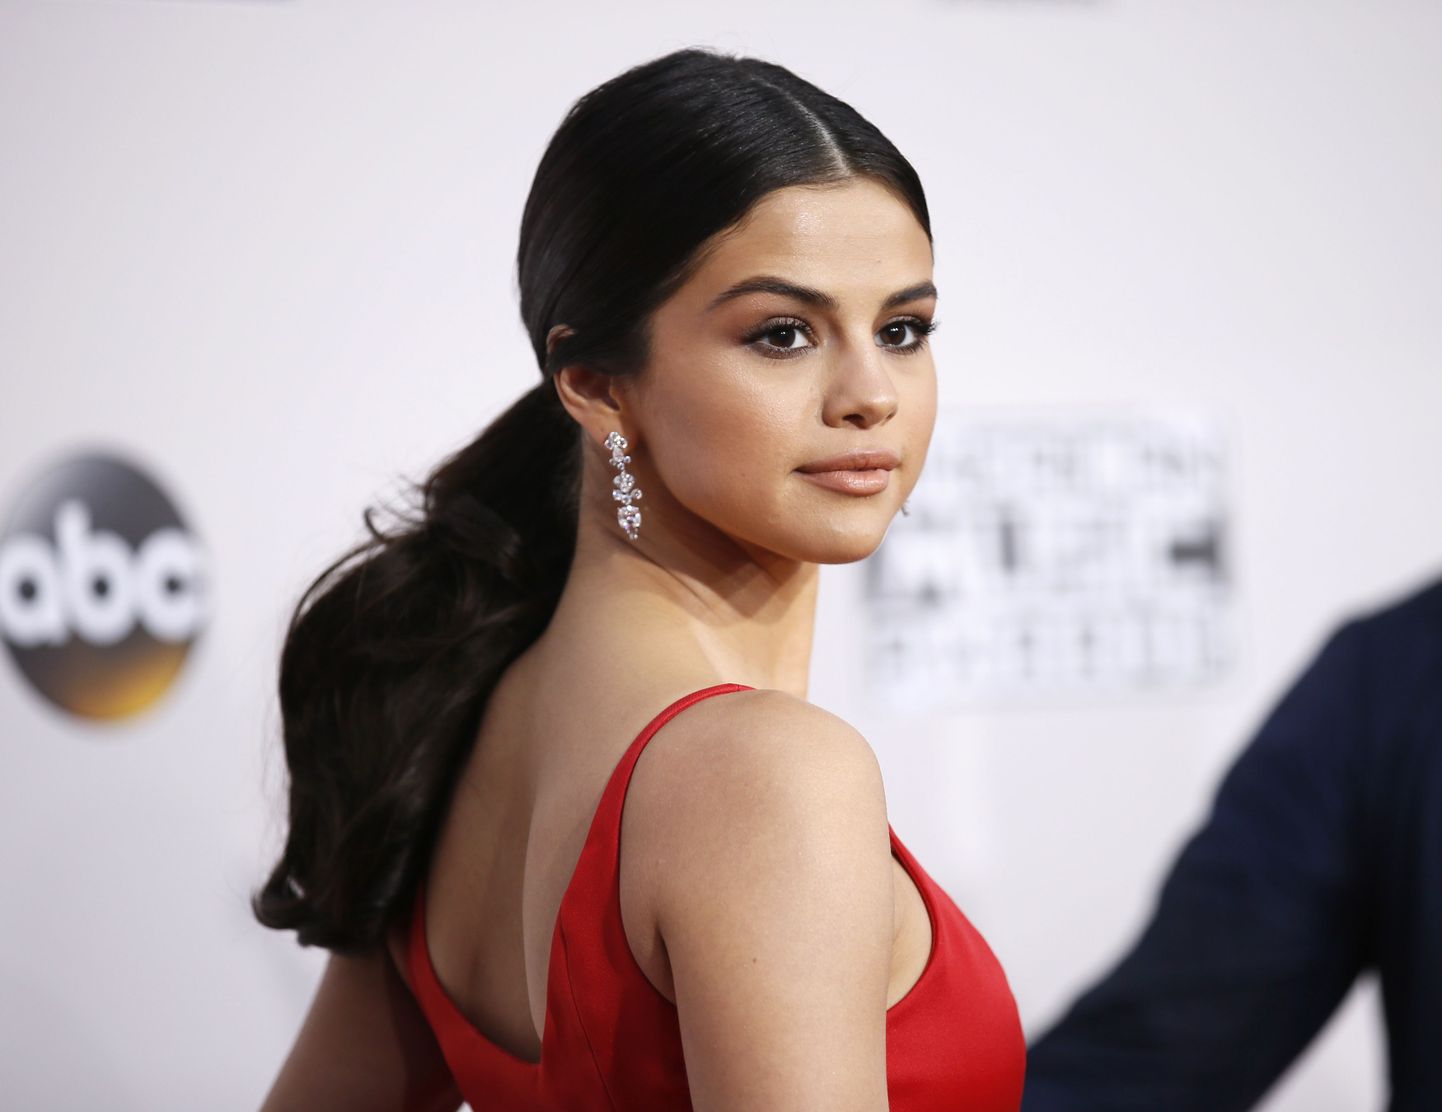 Recording artist Selena Gomez arrives at the 2016 American Music Awards in Los Angeles, California, U.S., November 20, 2016. REUTERS/Danny Moloshok